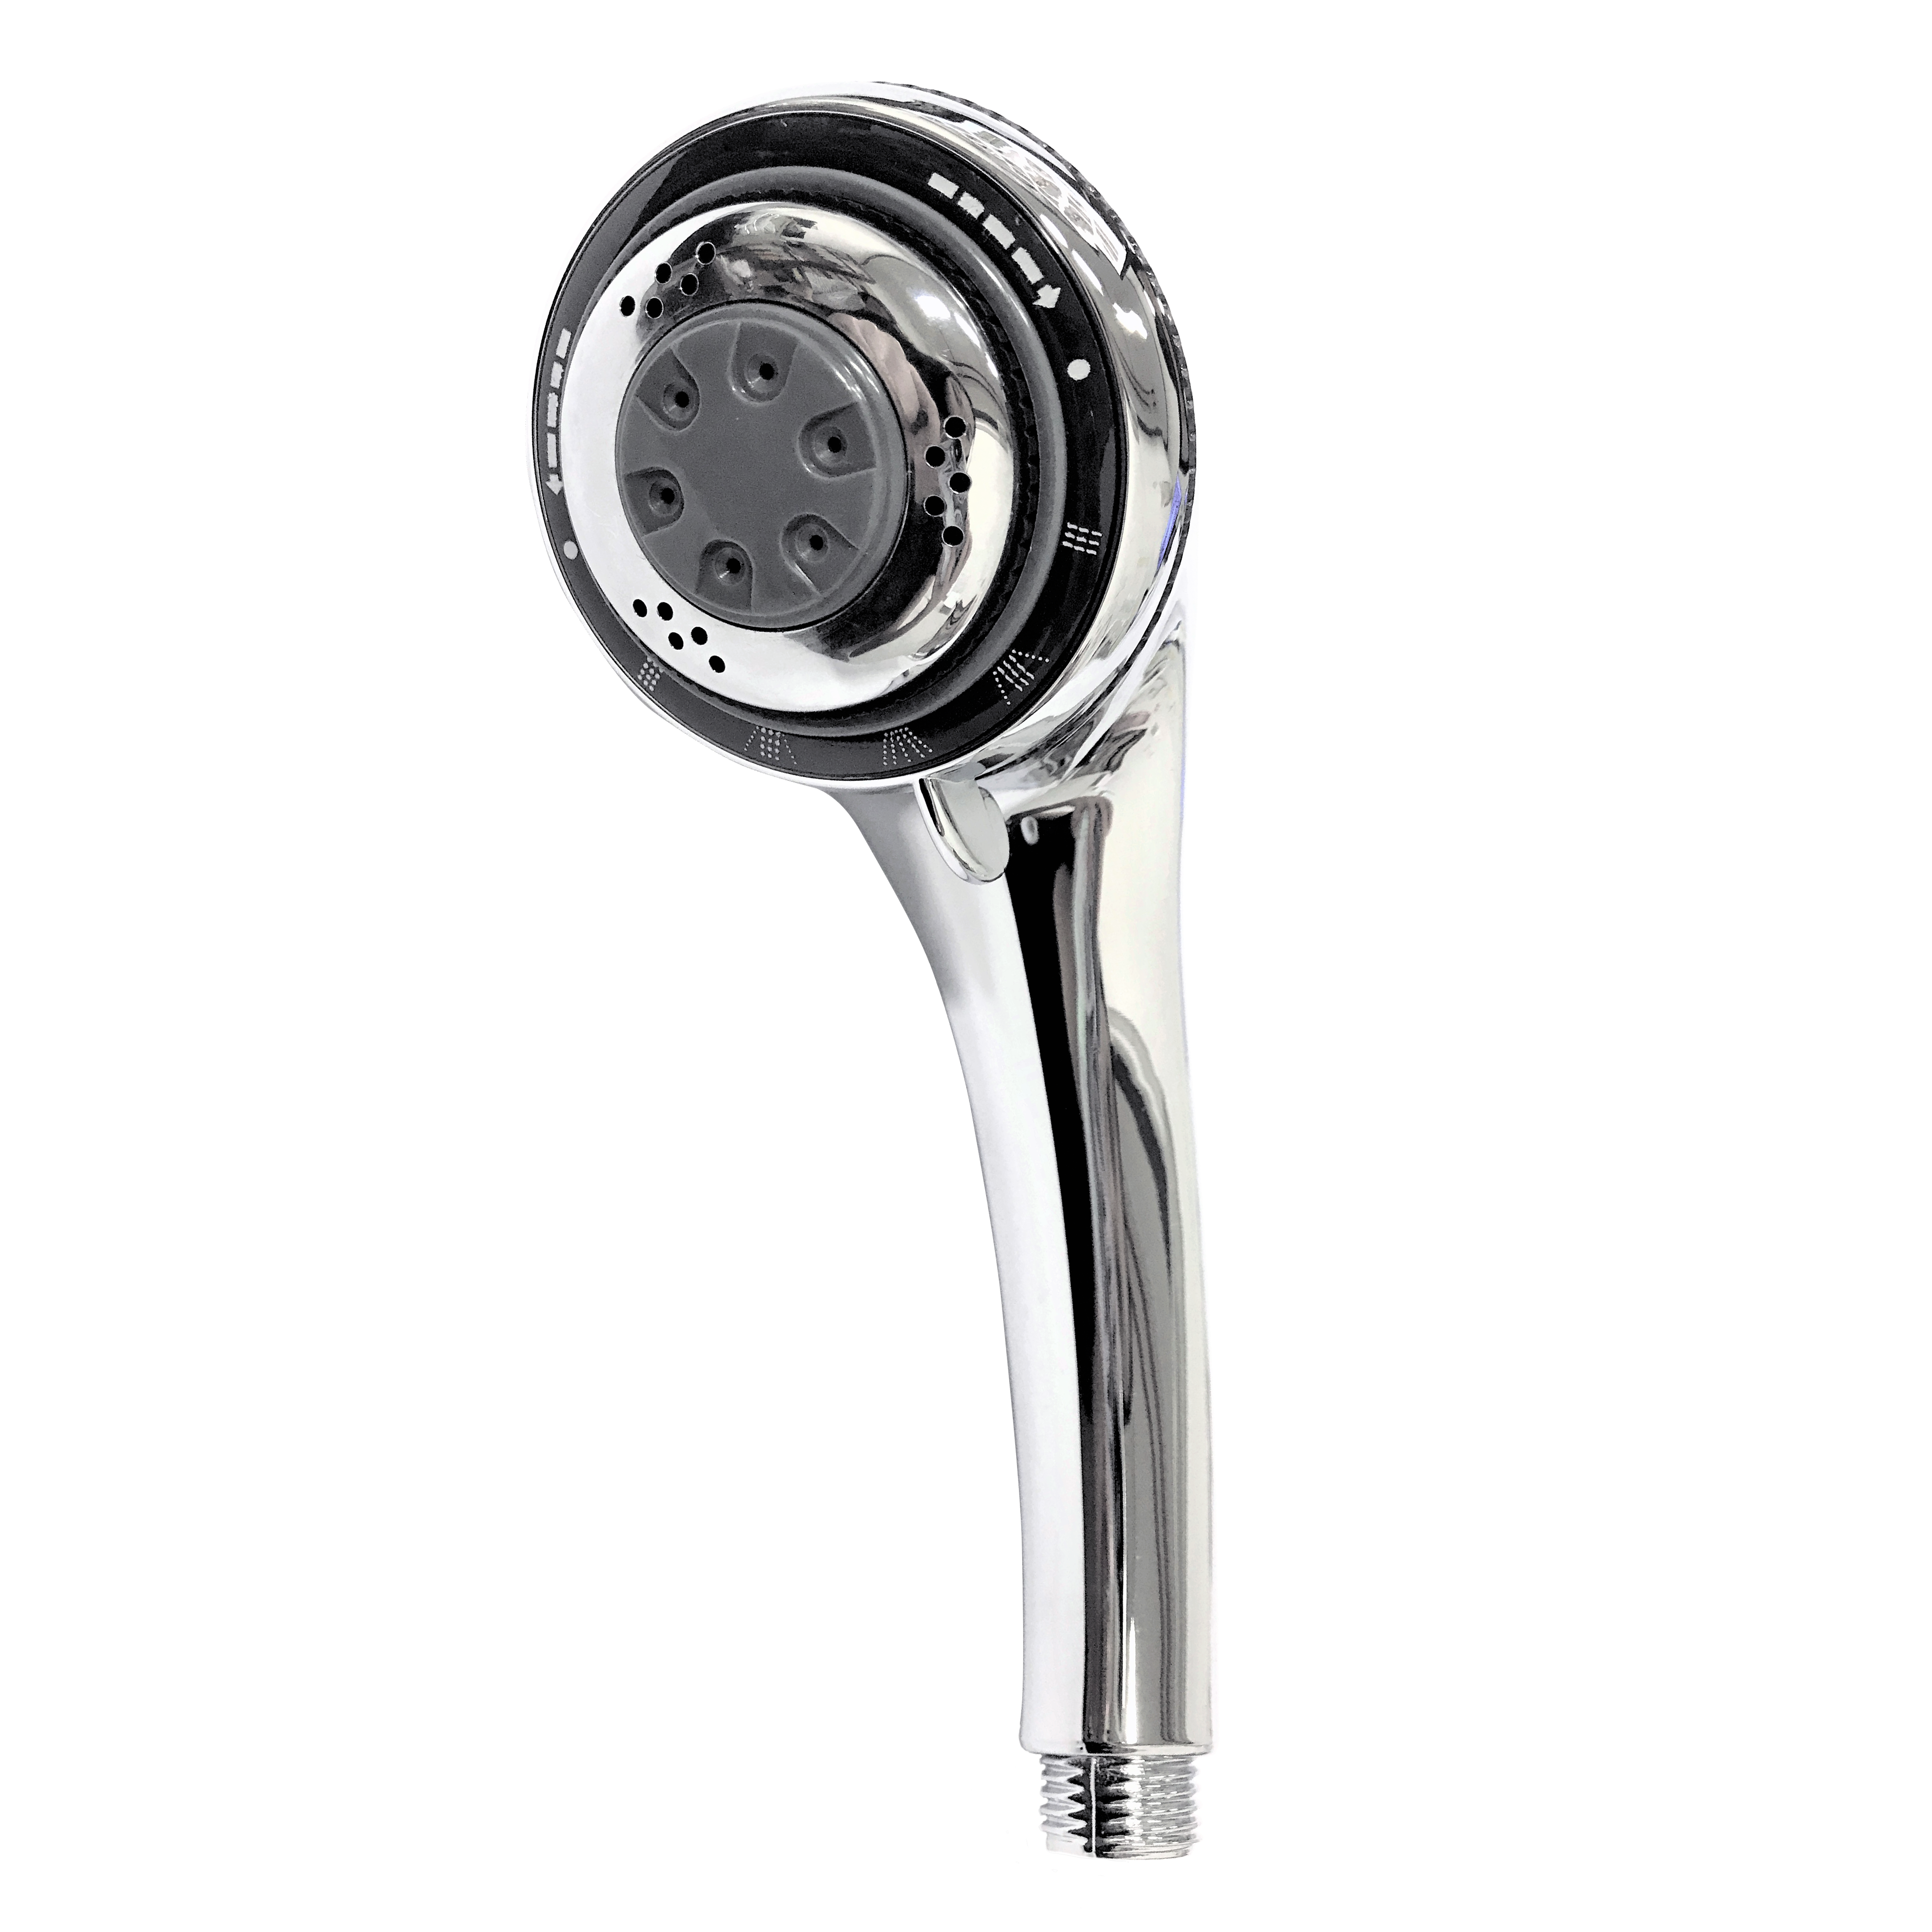 HUSKY 501 (5-Function Shower Head)